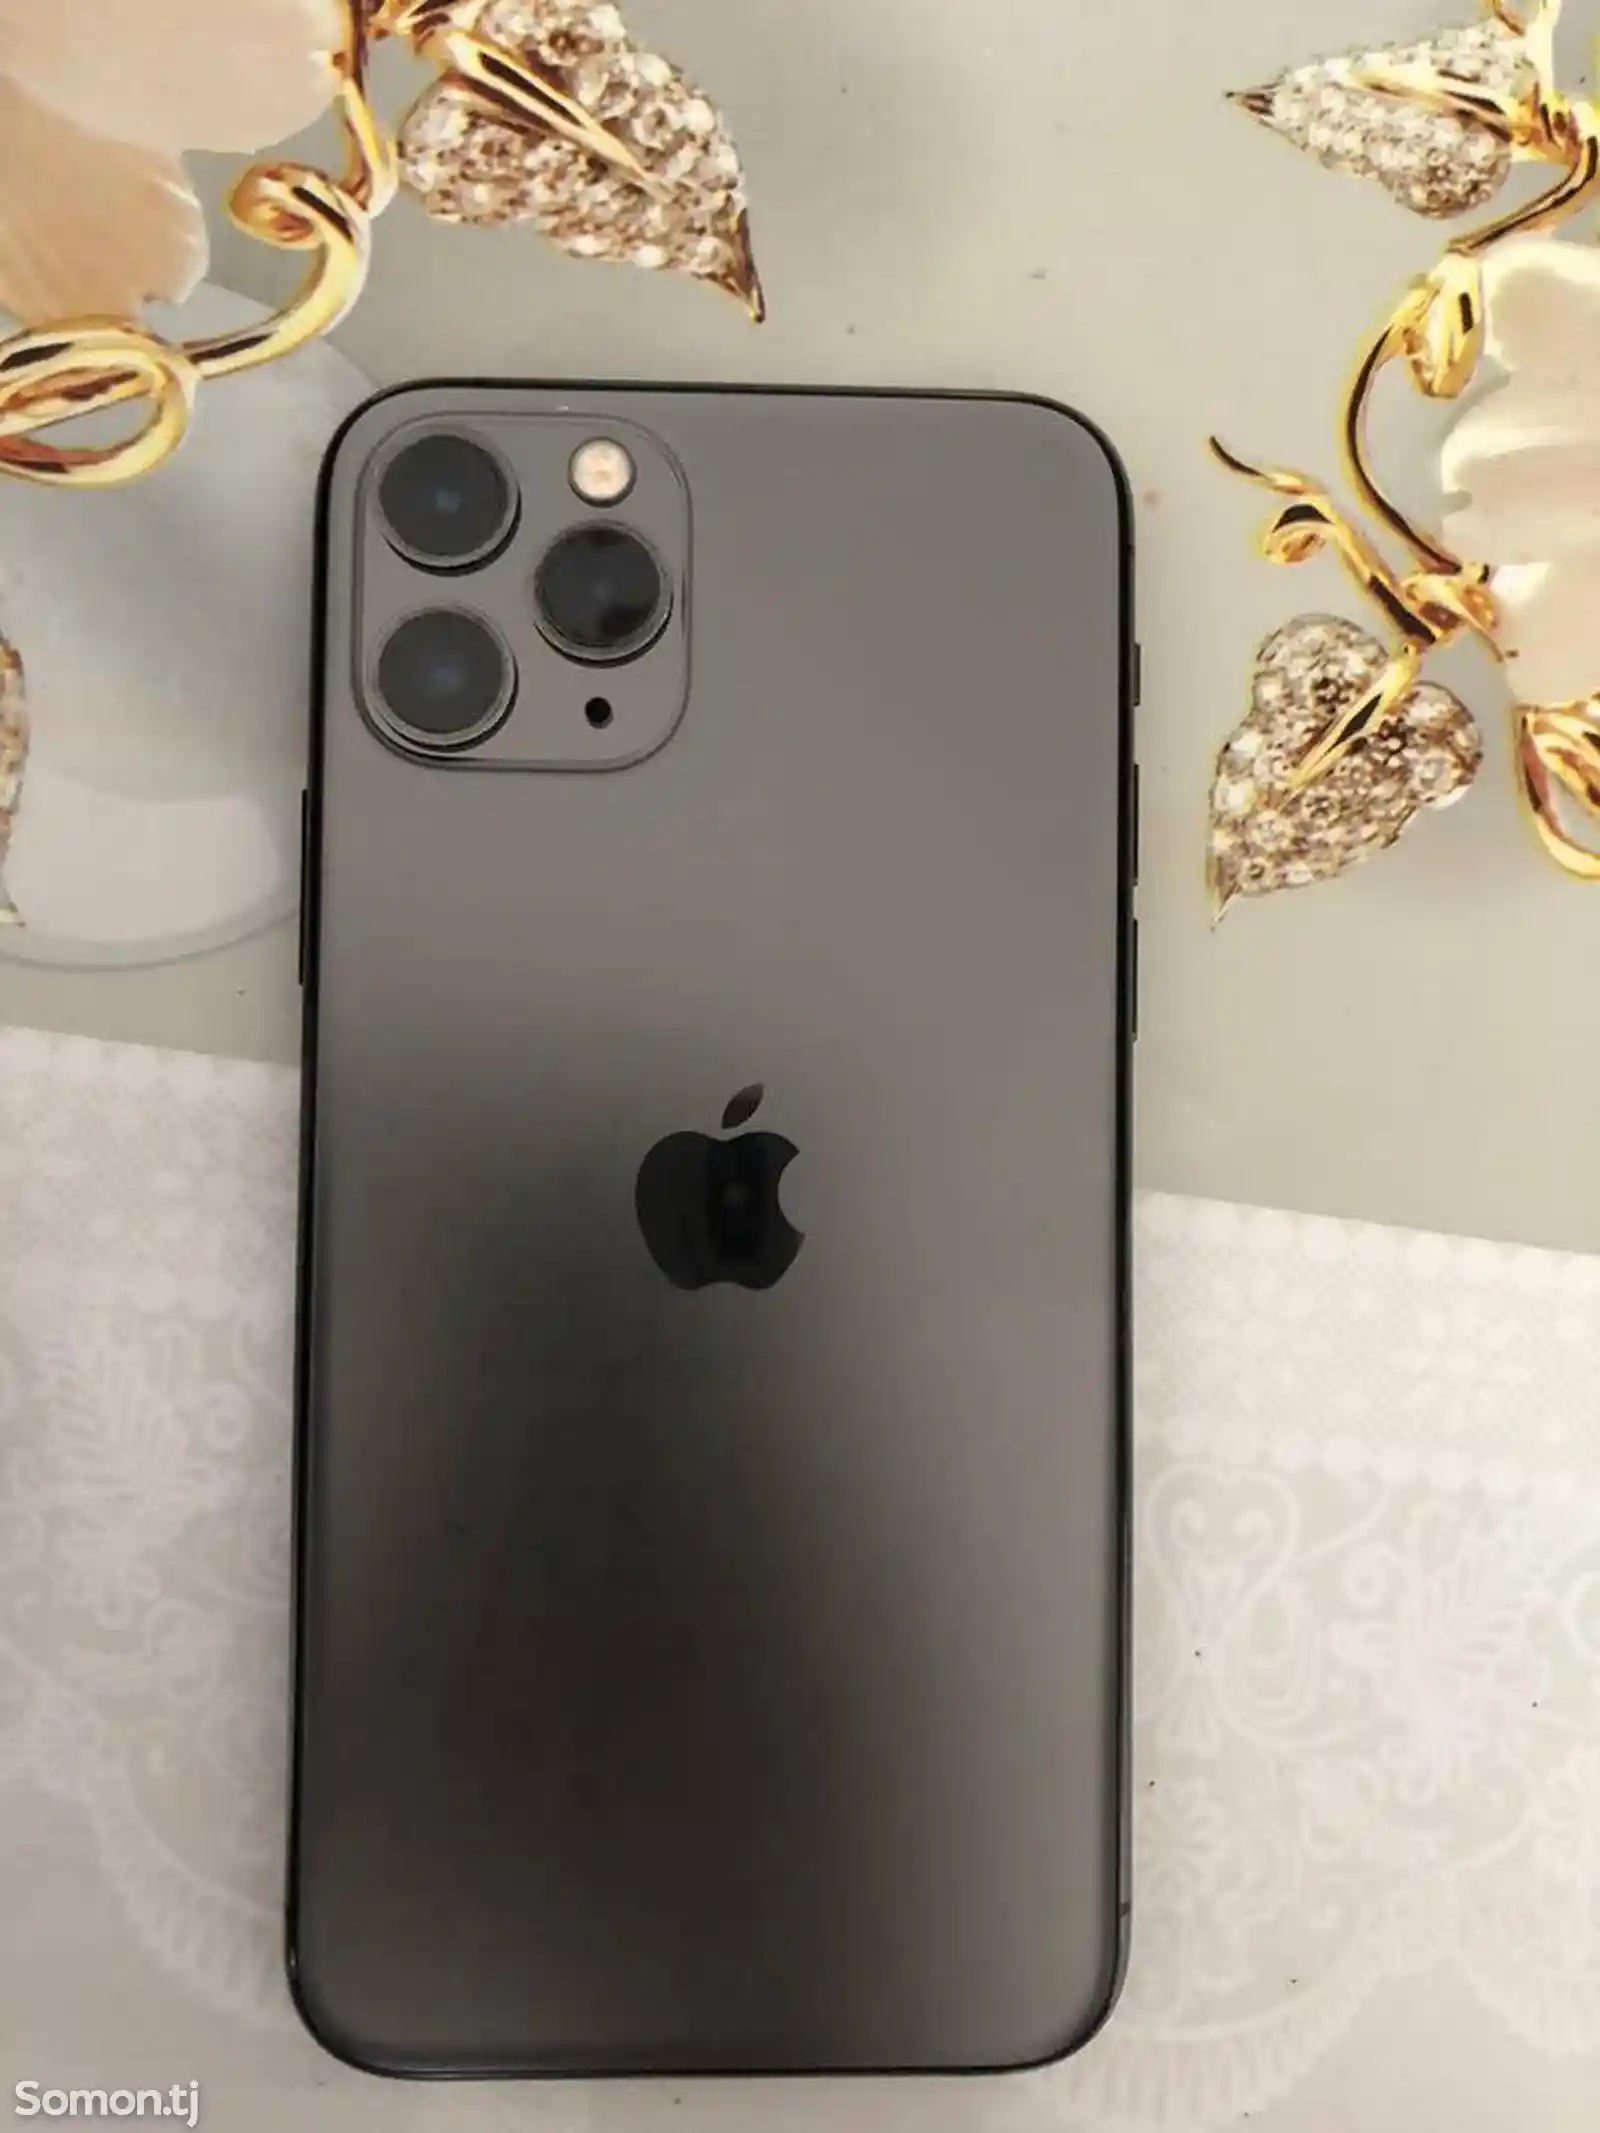 Apple iPhone 11 Pro, 64 gb, Silver-1